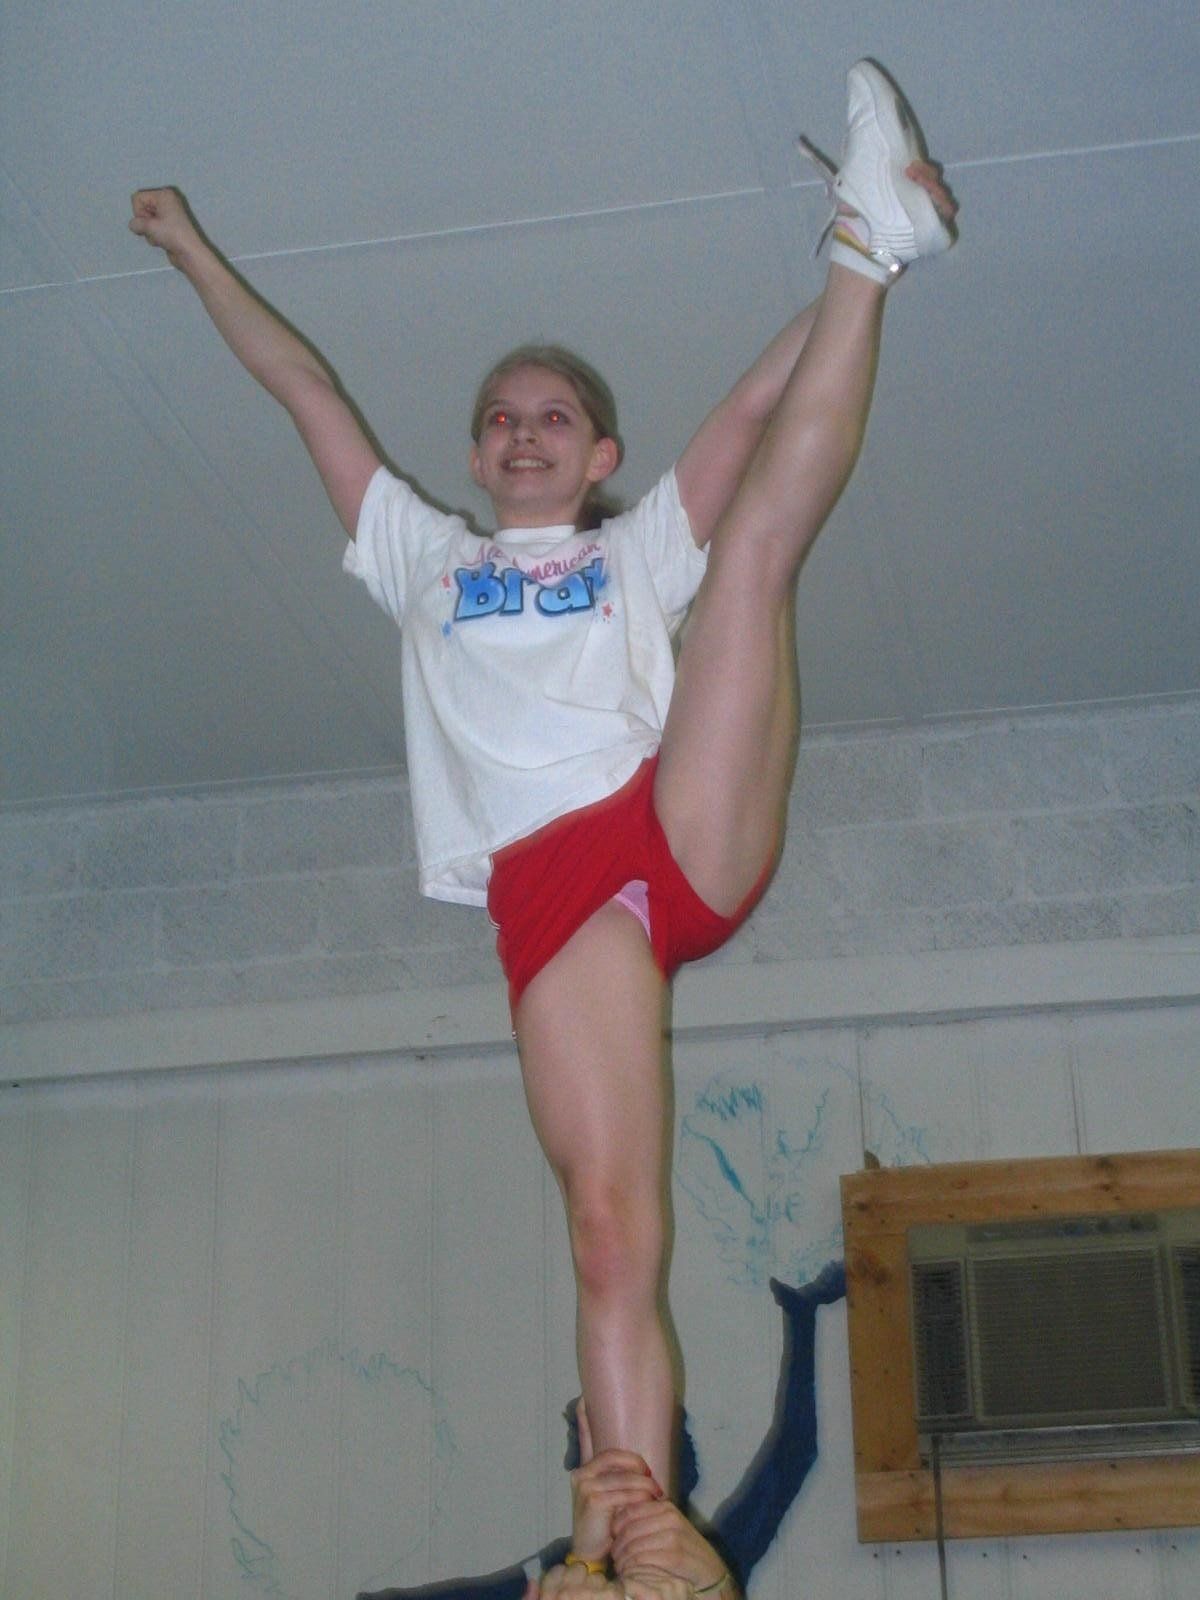 best of Free picture upskirt Cheerleader